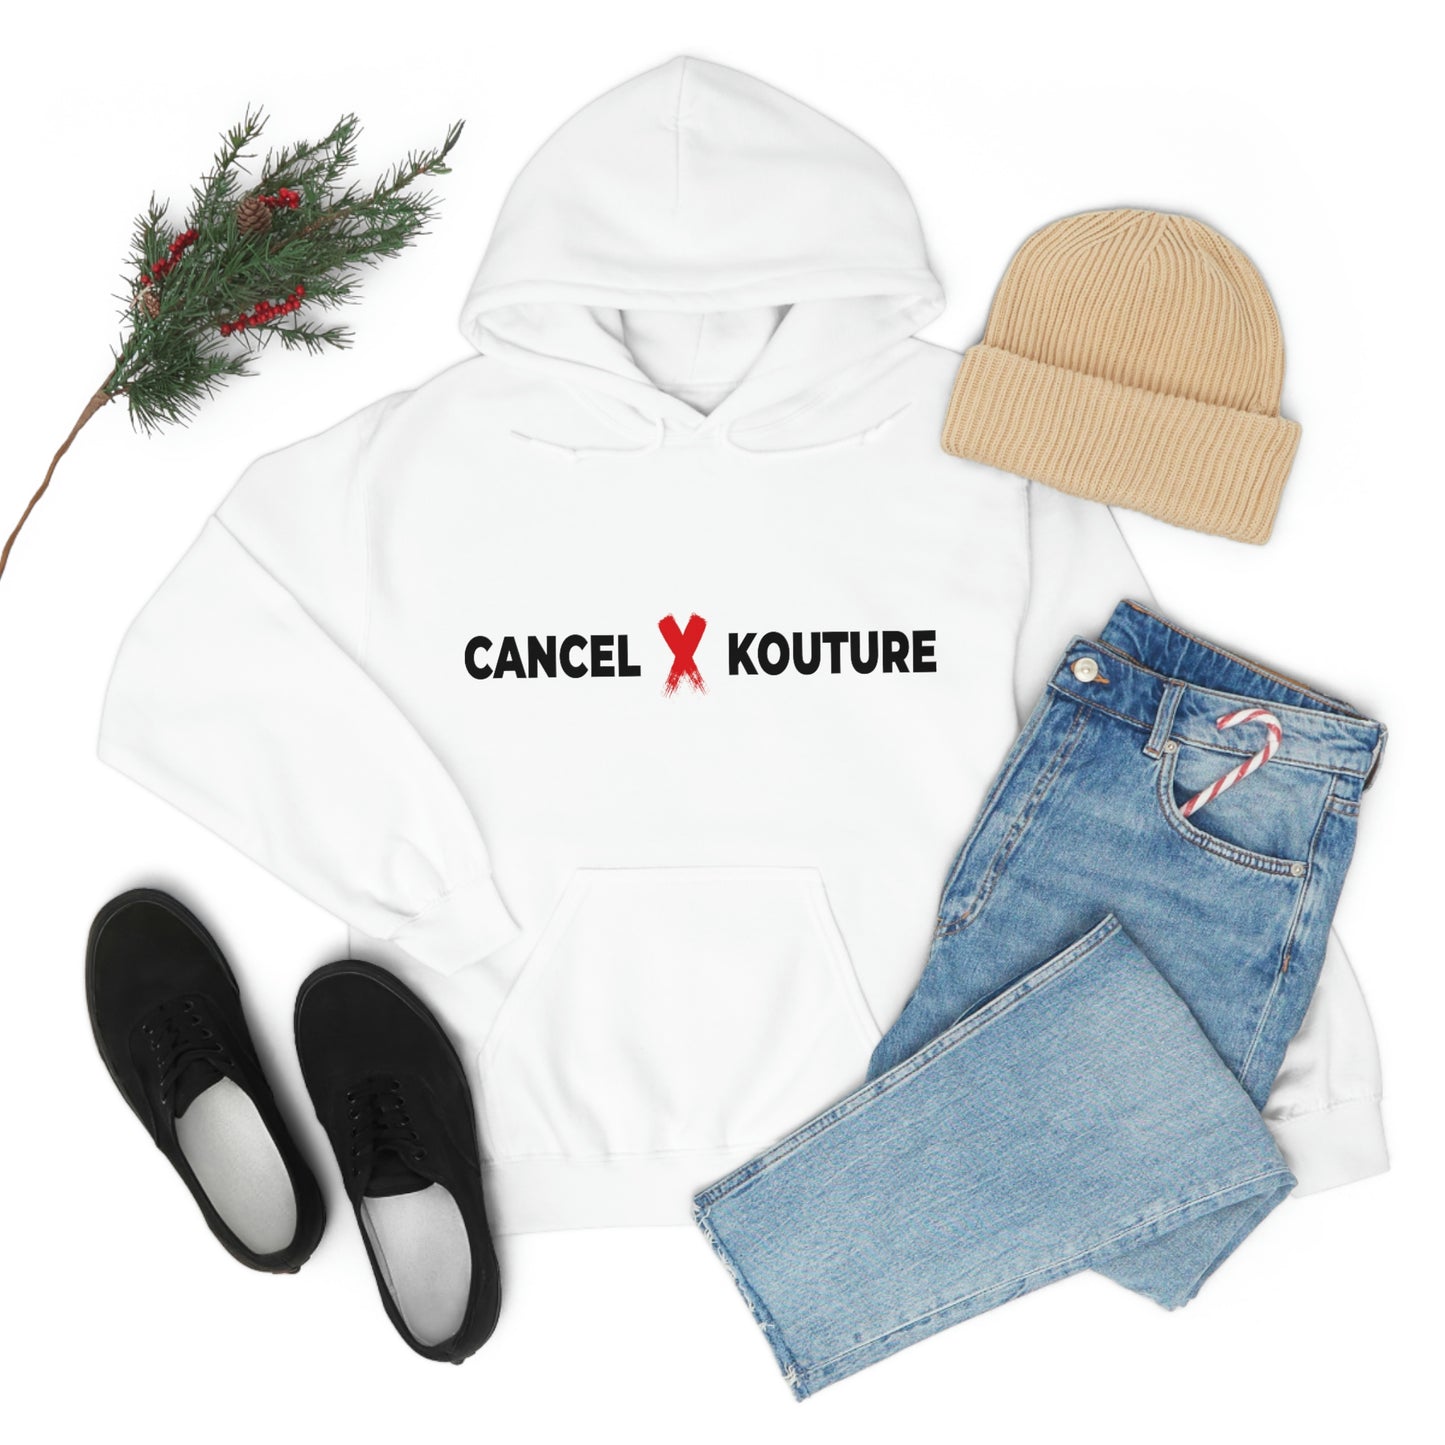 Unisex "Cancel ❌ Kouture" Hooded Sweatshirt